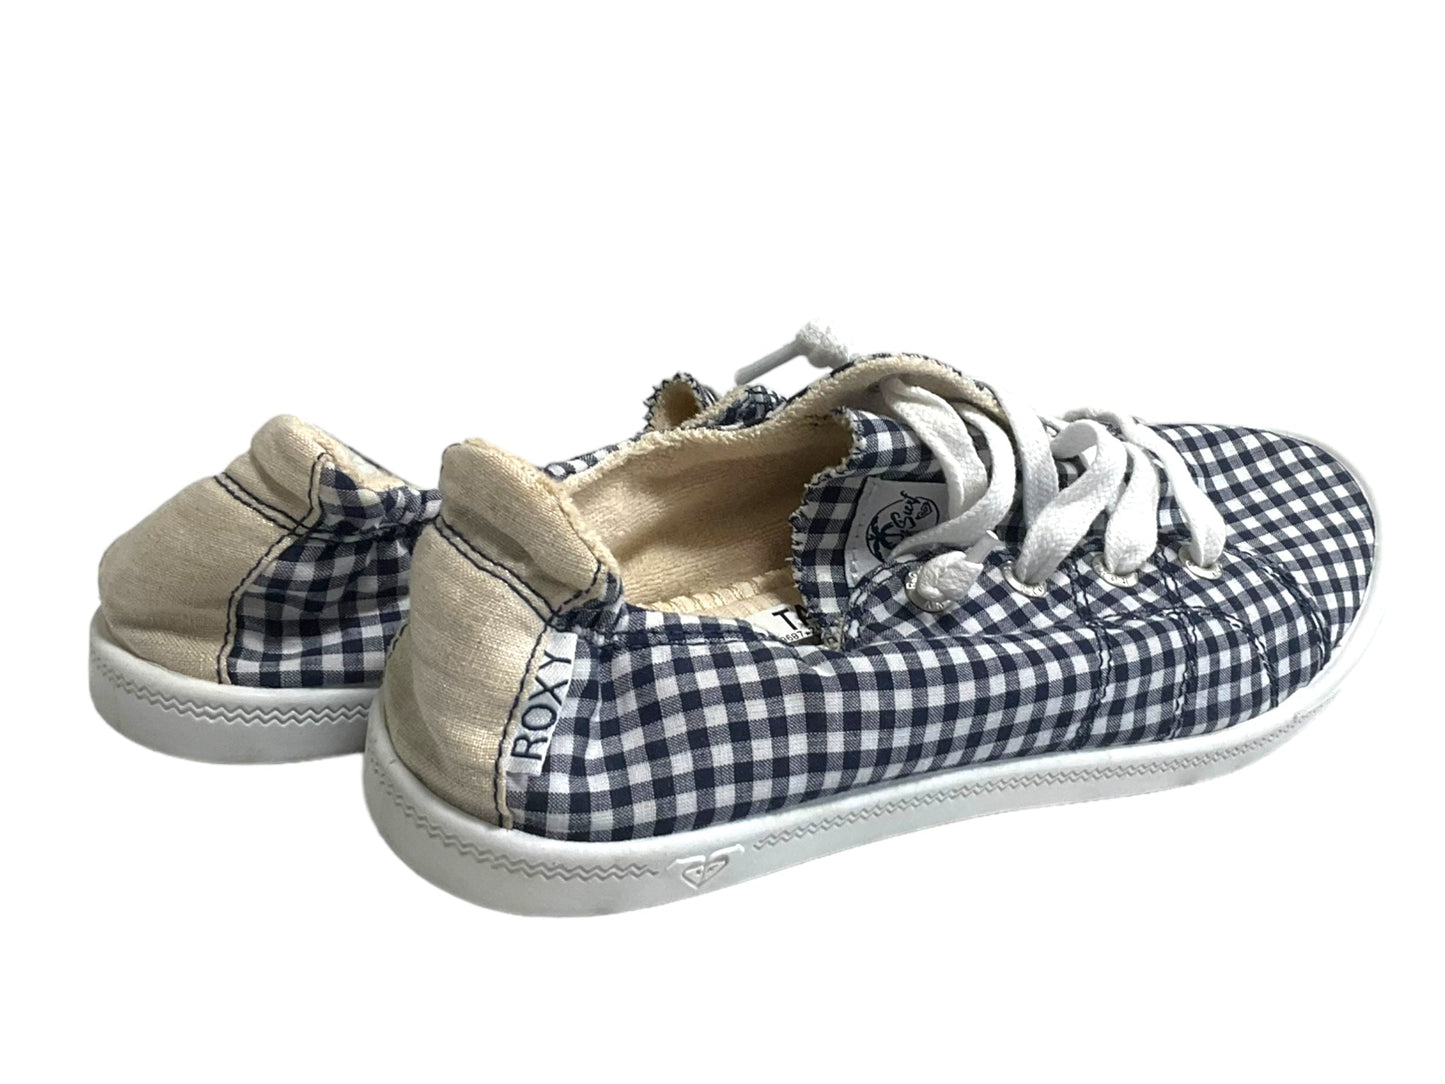 Checkered Pattern Shoes Flats Roxy, Size 8.5